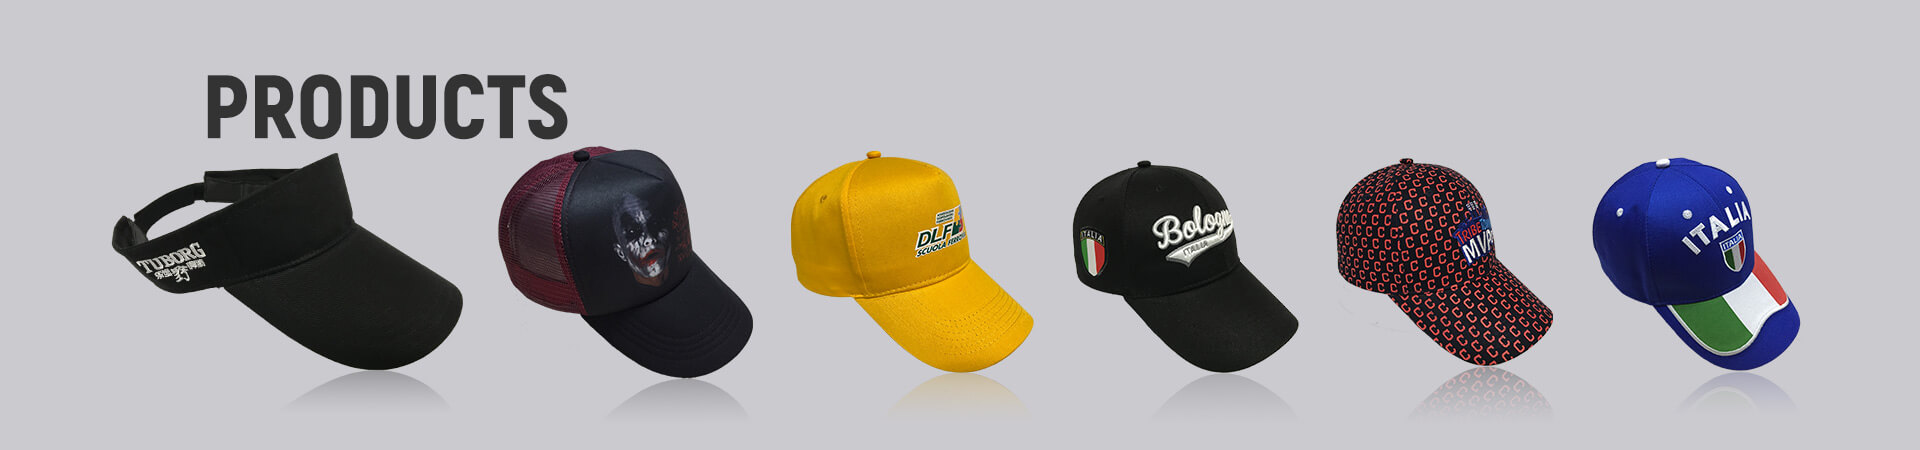 Bucket Hat Archives - Baseball Cap,Sports Cap,Golf Cap,Bucket Hat,Fisherman Hat,Trucker Hat